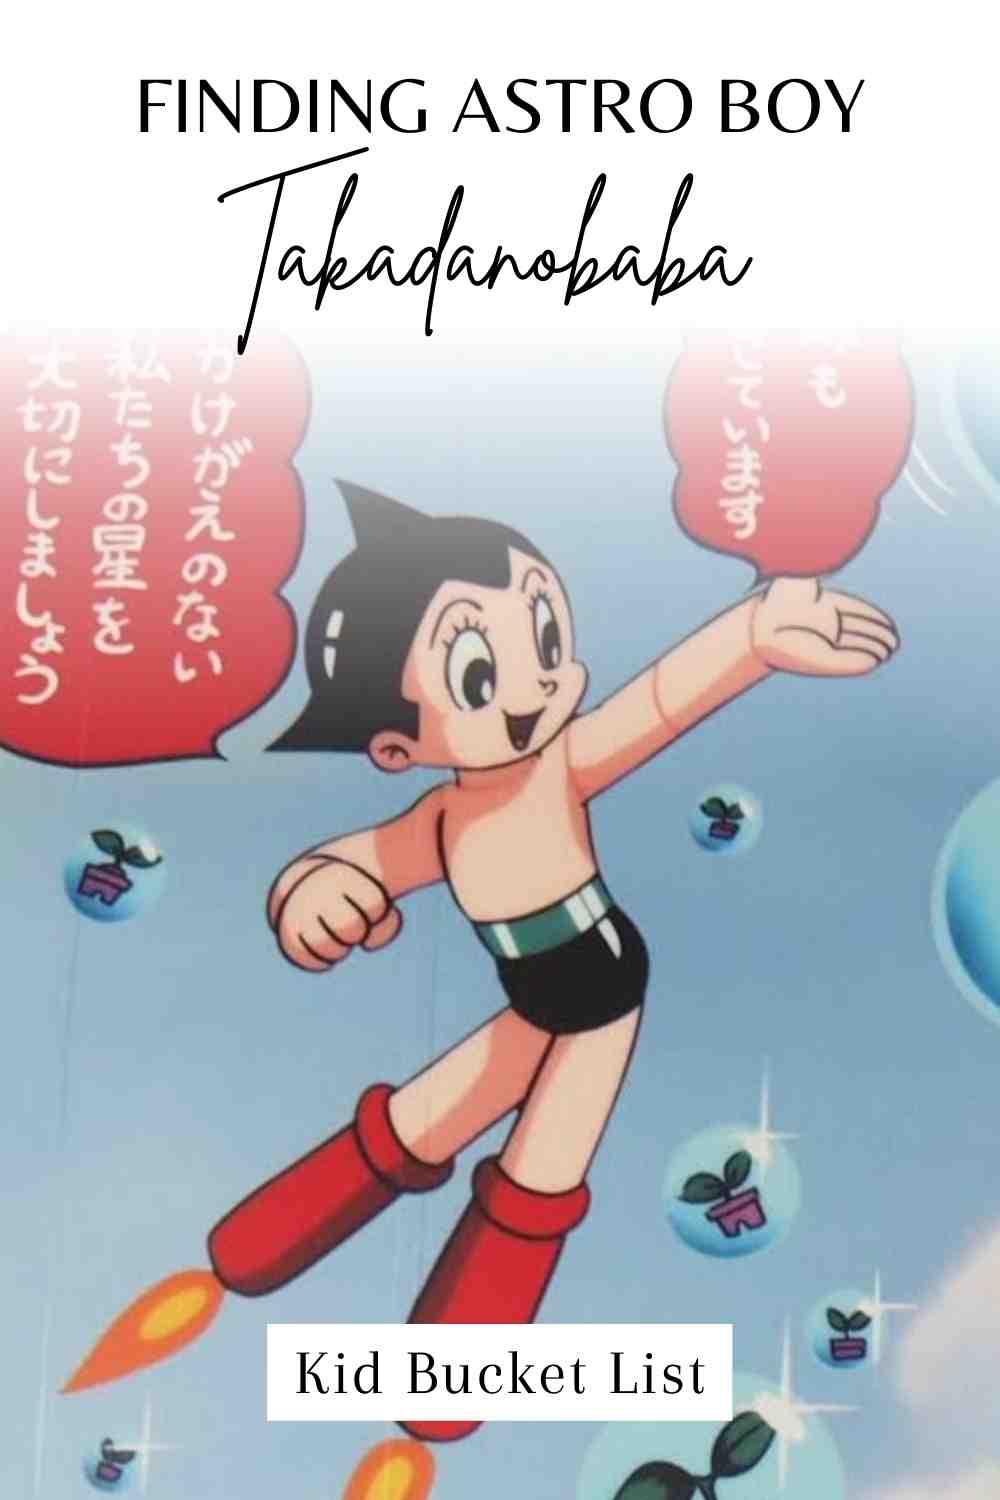 Pin Astro Boy in Takadanobaba Japan